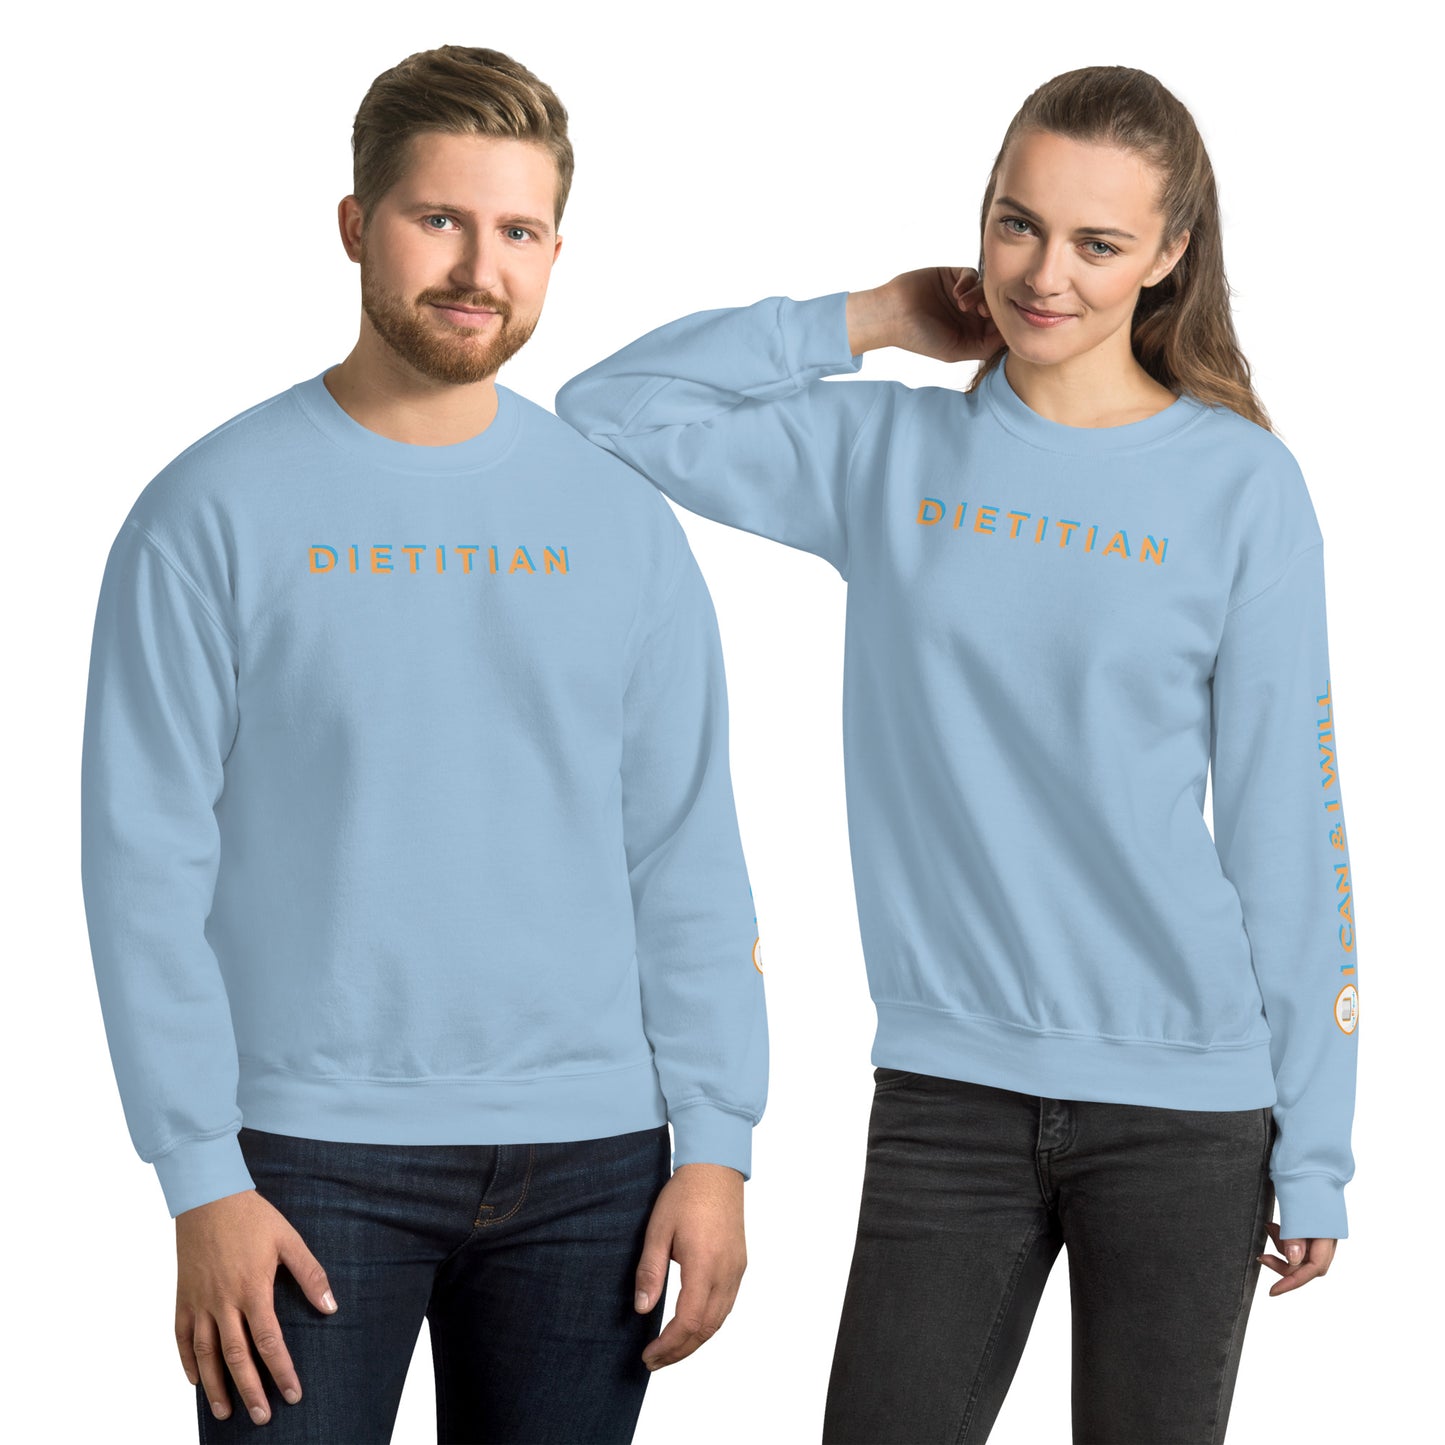 MyRDguide DIETITIAN - Unisex Sweatshirt